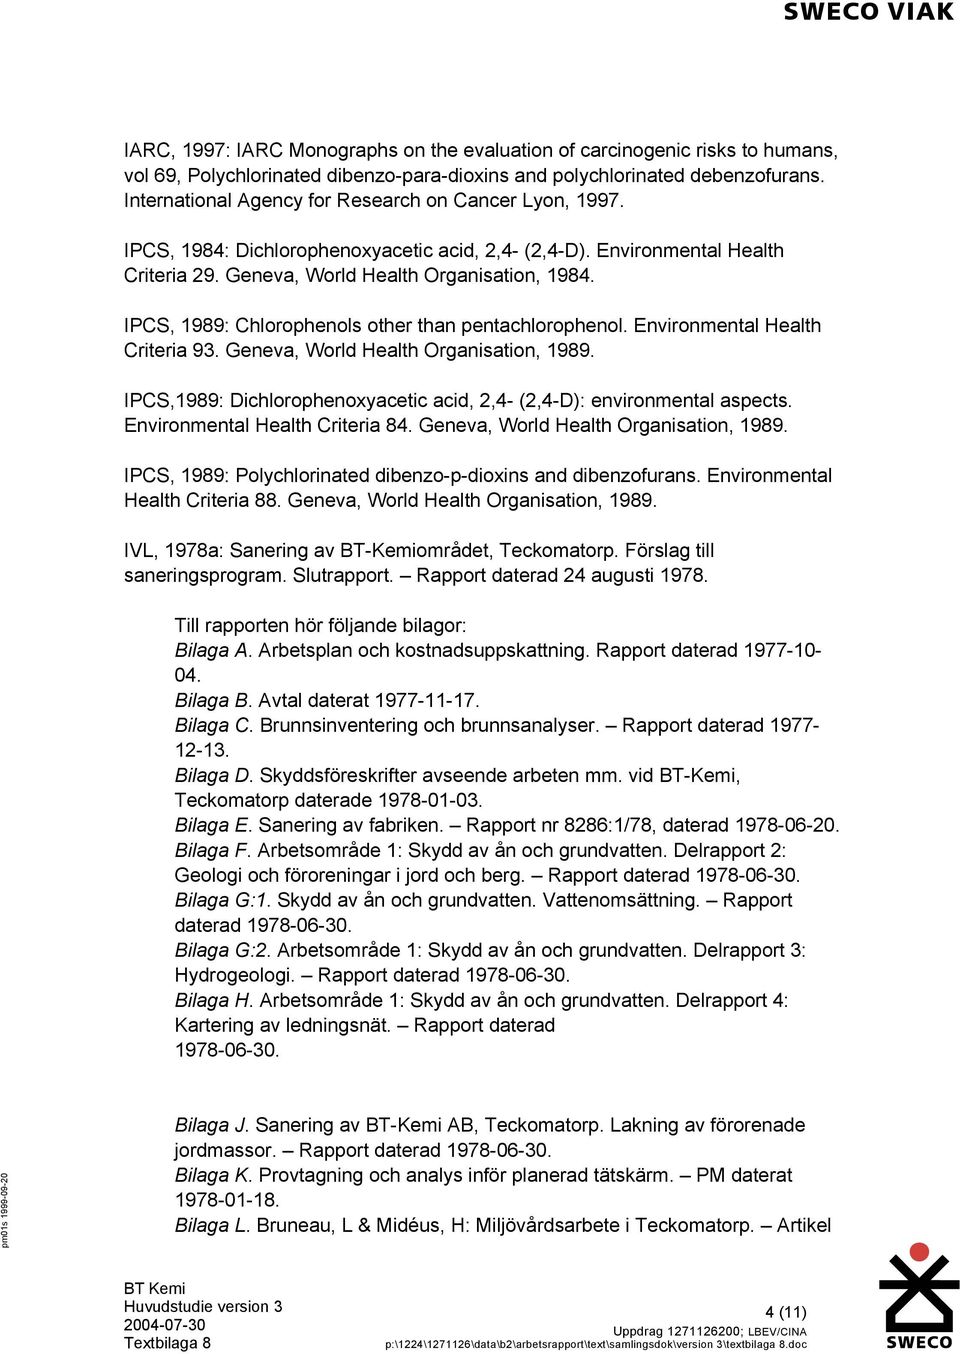 IPCS, 1989: Chlorophenols other than pentachlorophenol. Environmental Health Criteria 93. Geneva, World Health Organisation, 1989.